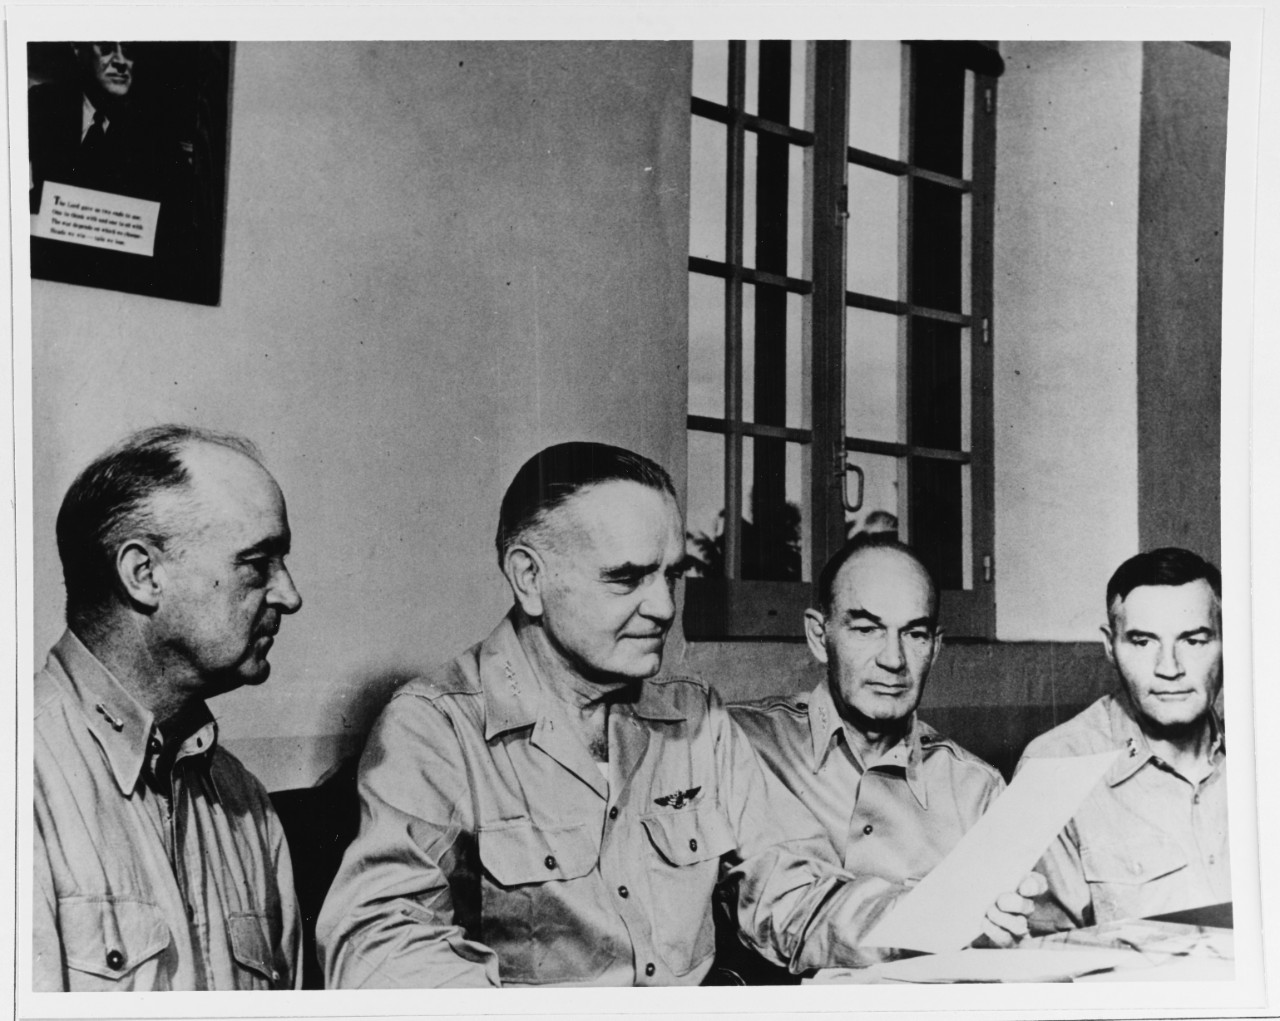 LtGen. A.A. Vandegrift, Adm. Wm. F. Halsey, VAdm. Miff Harmon, and MGen. Barrett USMC